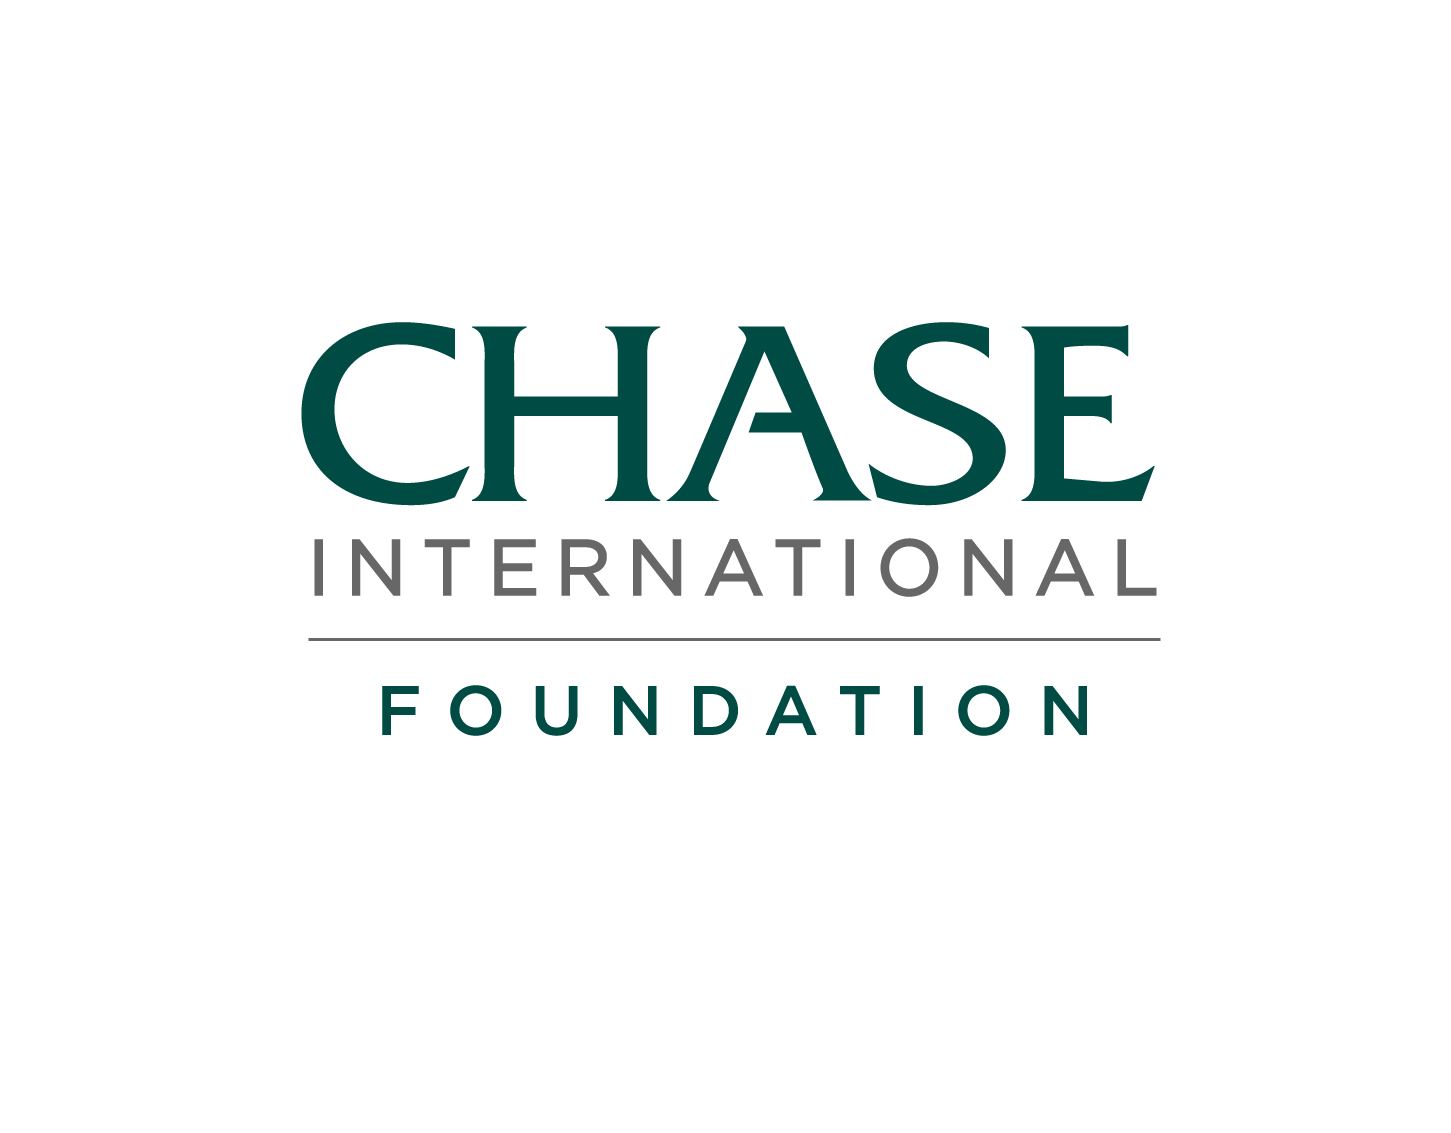 Chase International Foundation logo